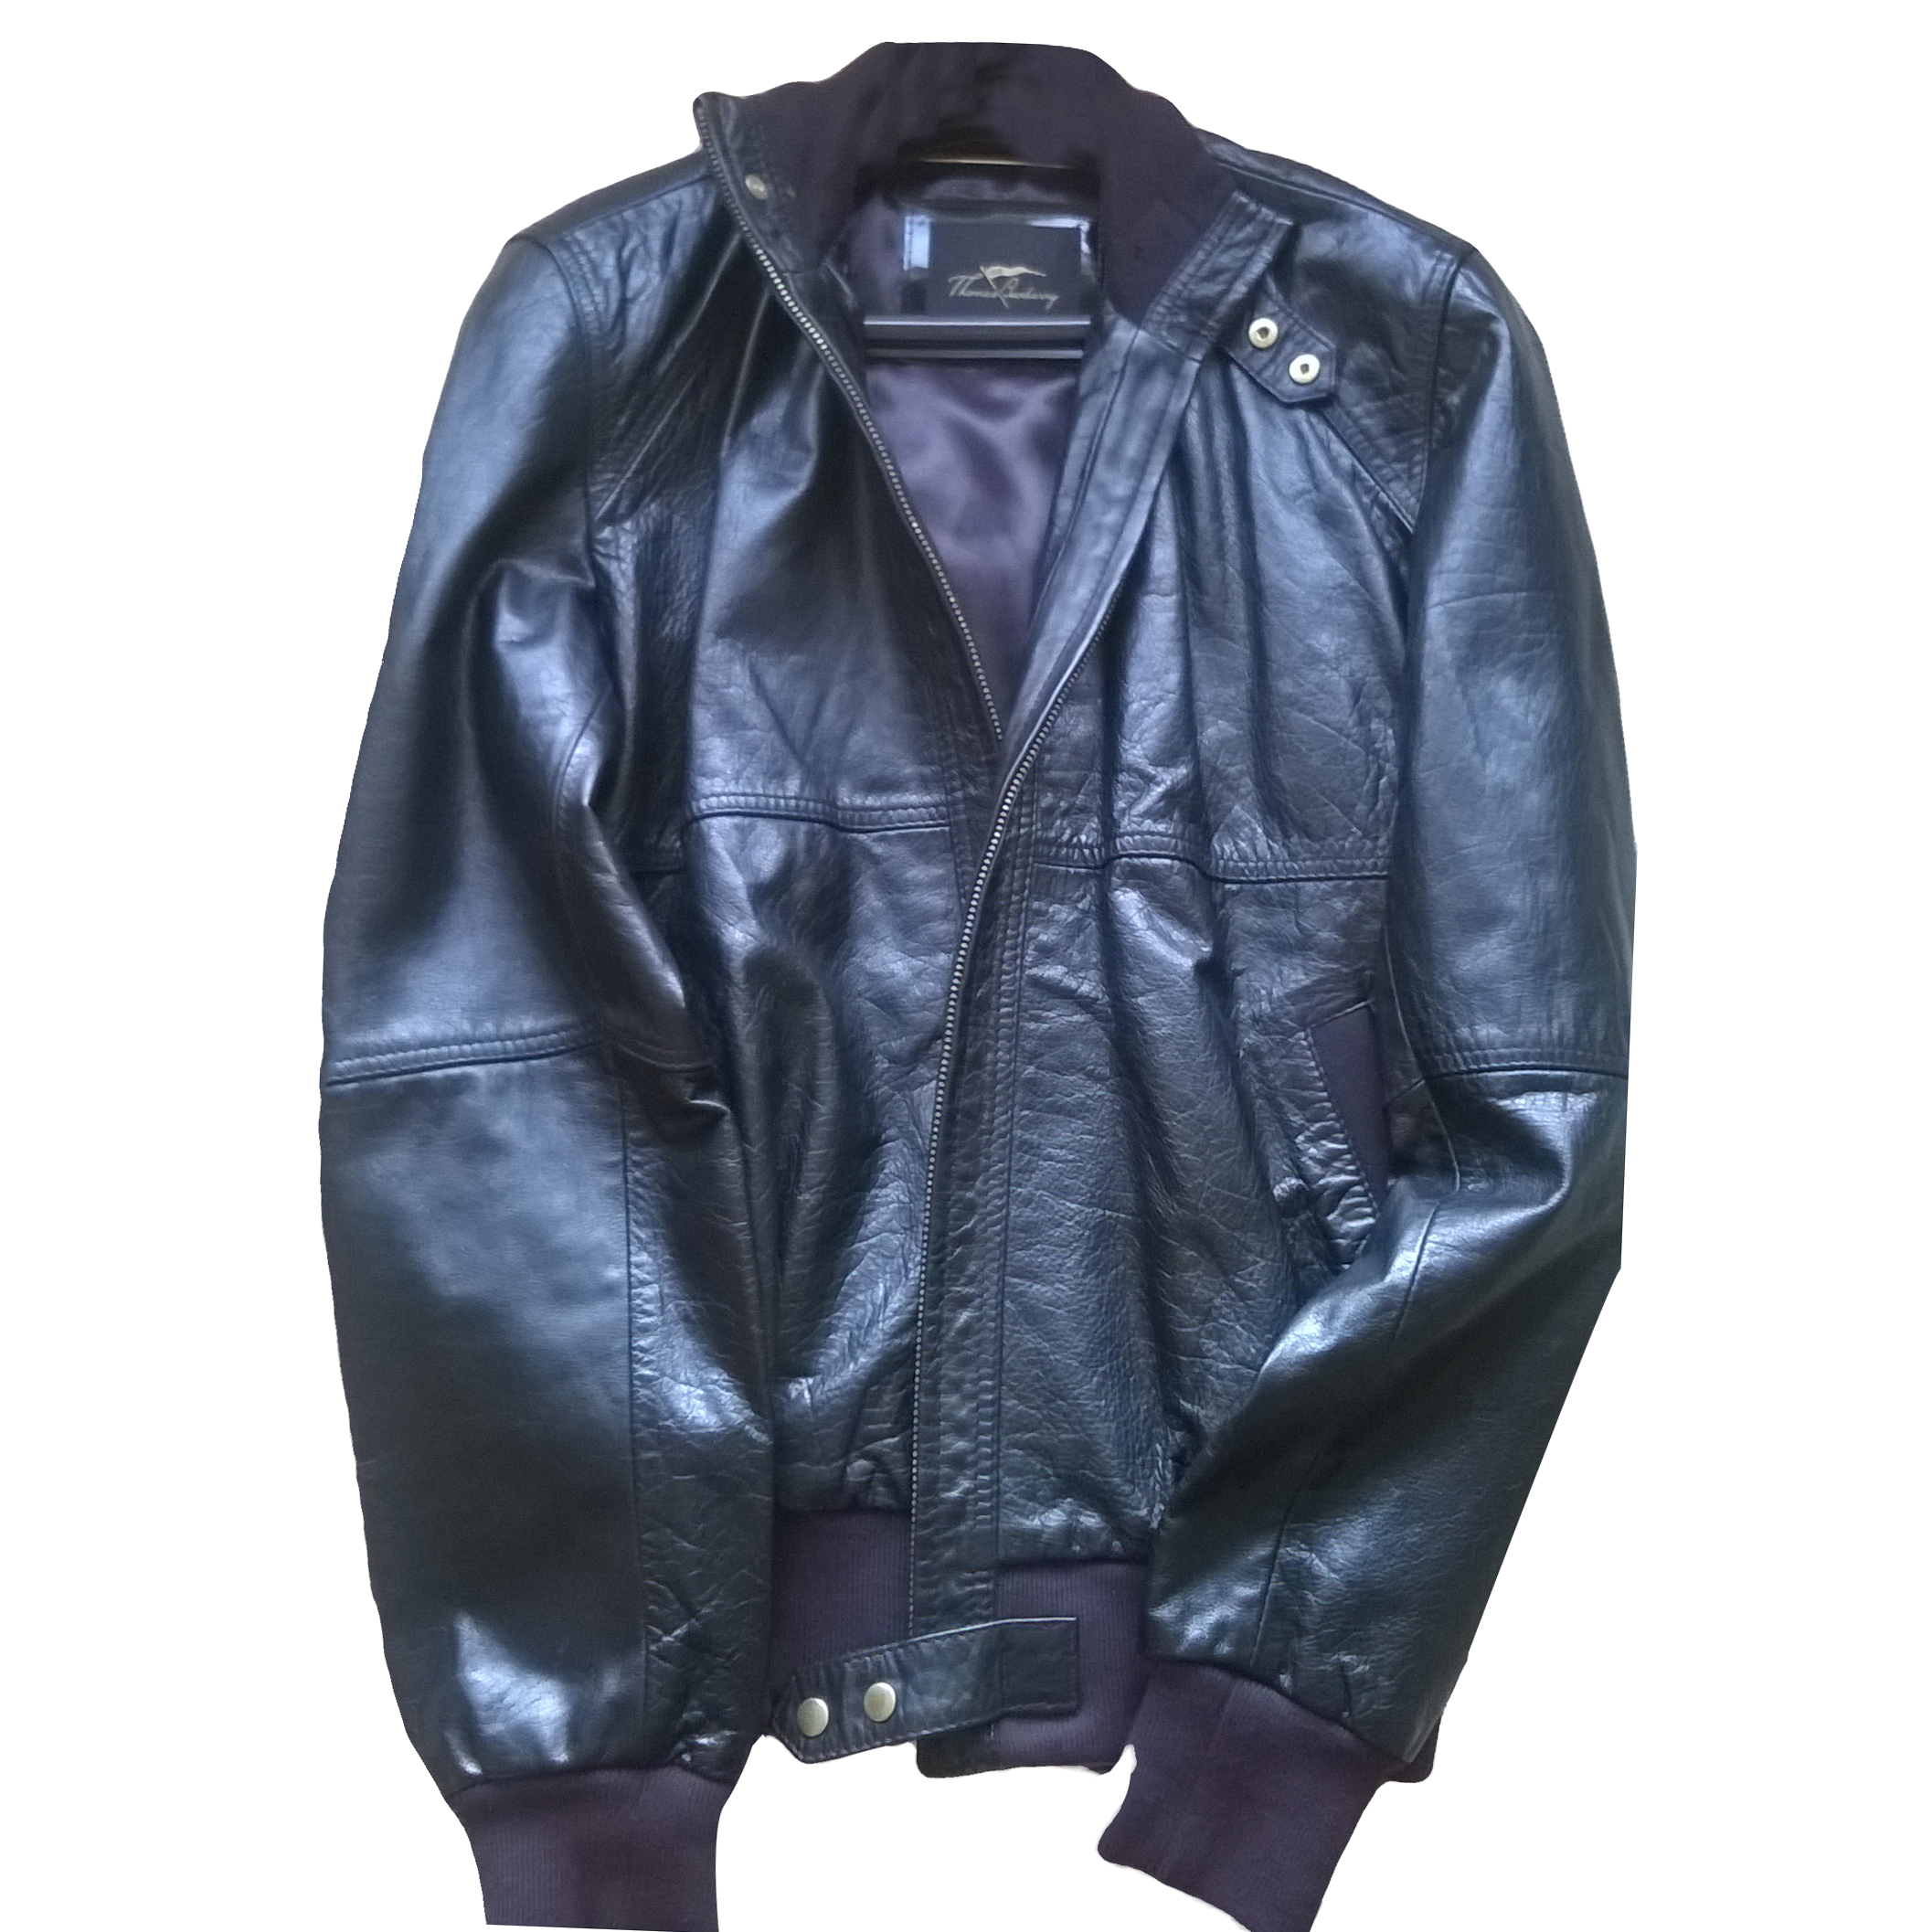 burberry leather jacket price